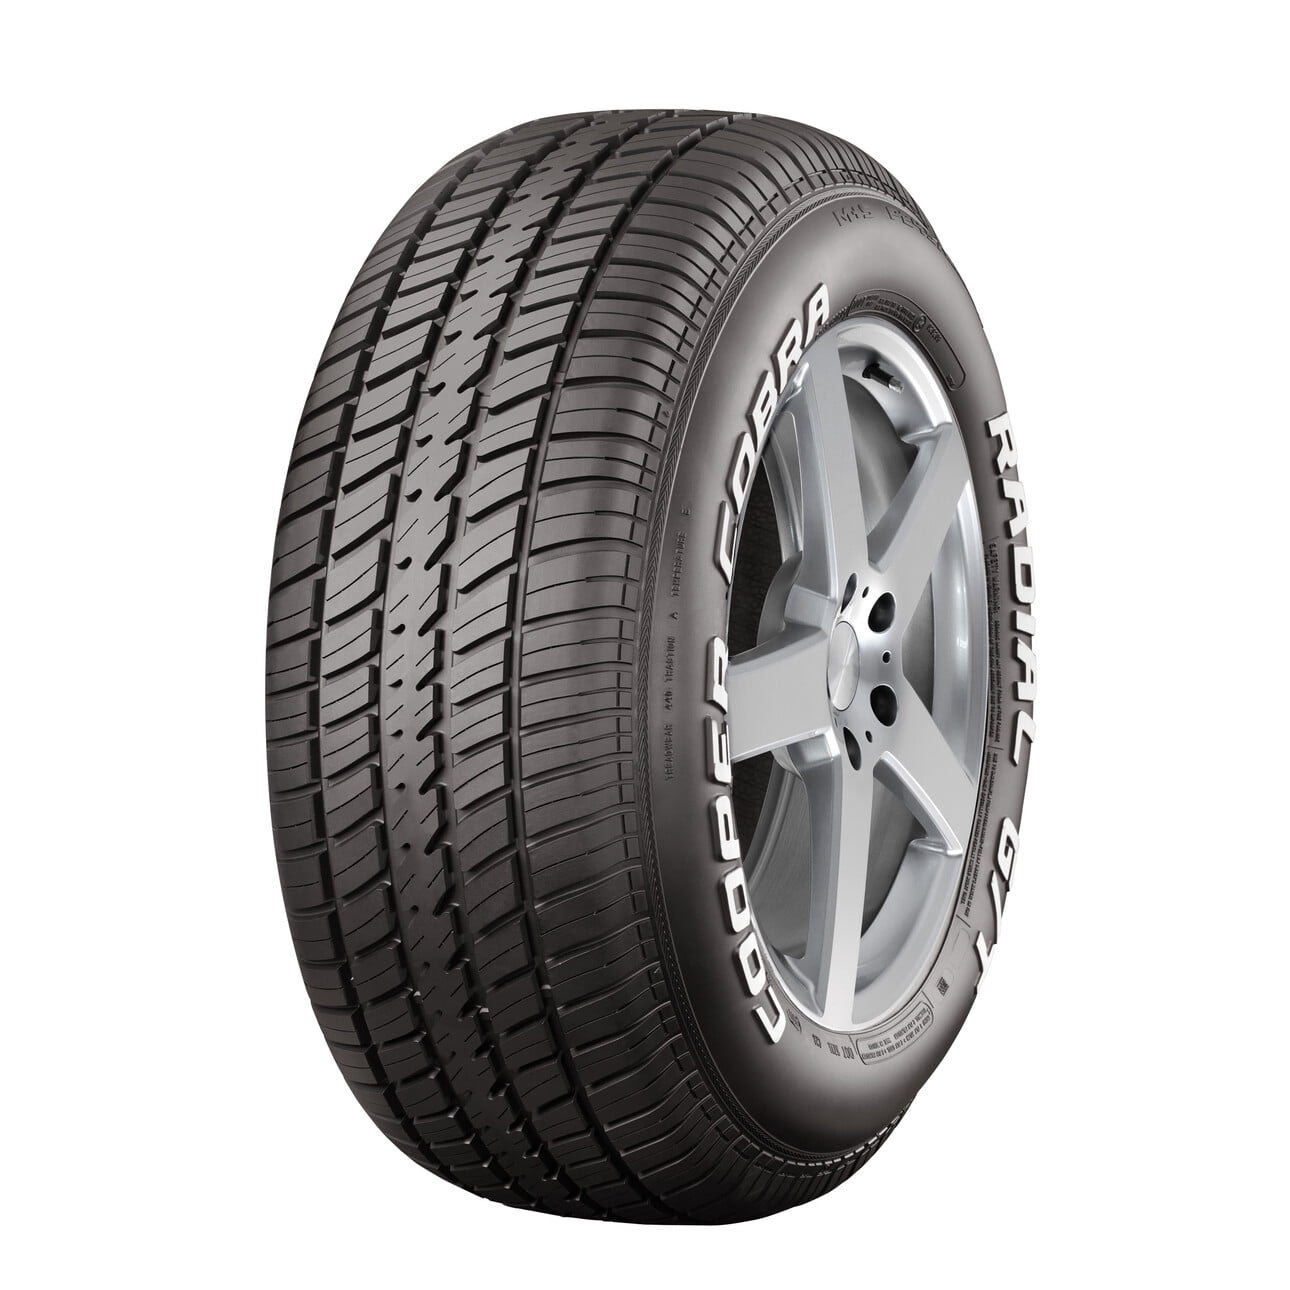 Milestar streetsteel LT245/60R15 100T bsw summer tire